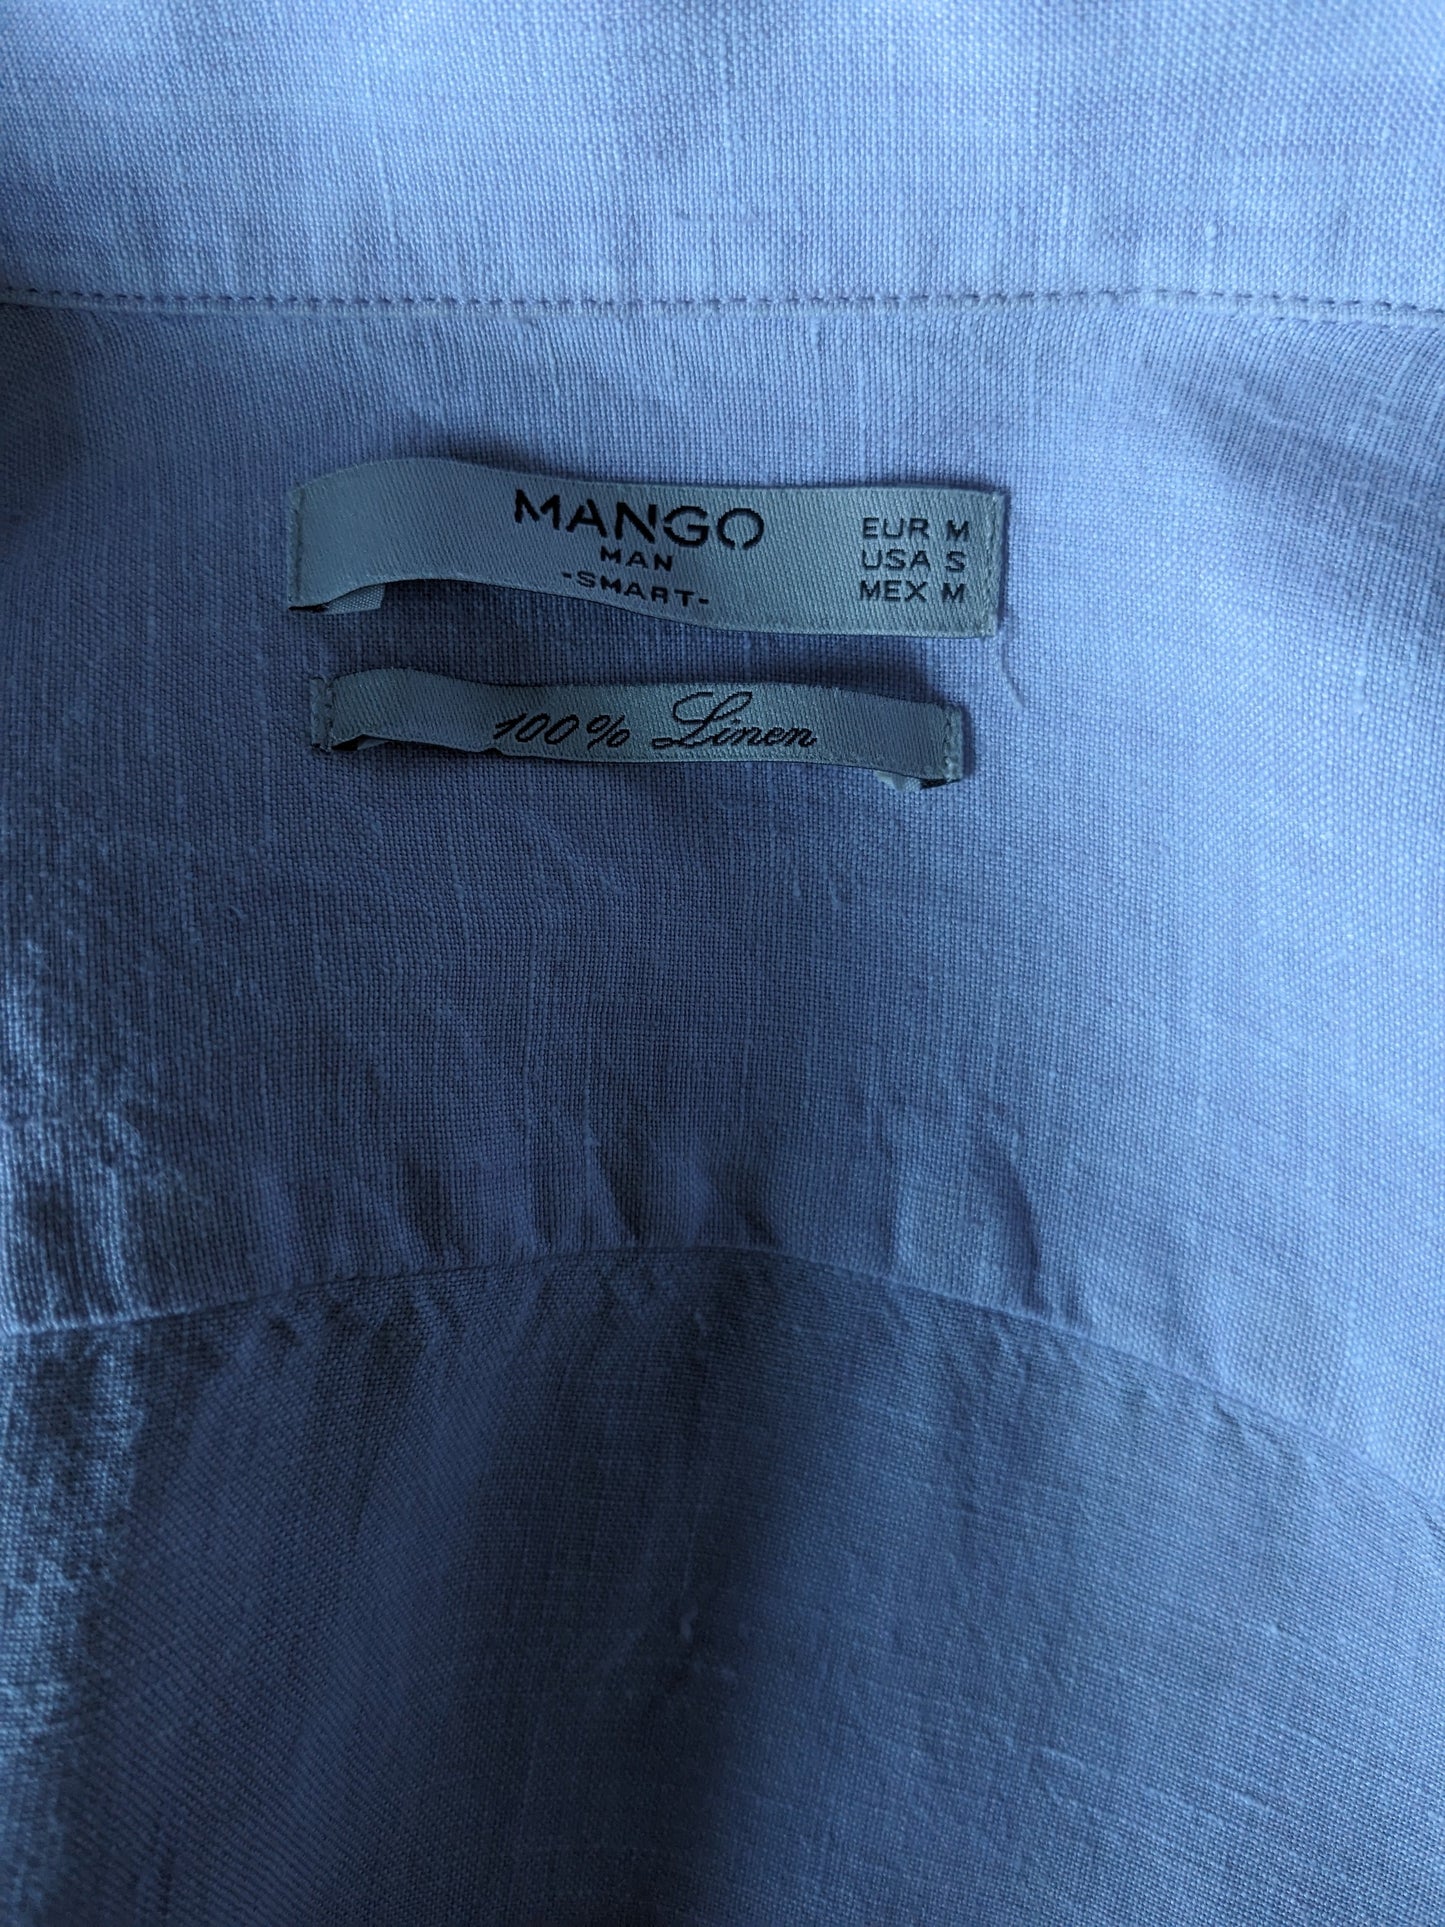 Mango Man Camisa de lino. Lilac de color. Talla M.